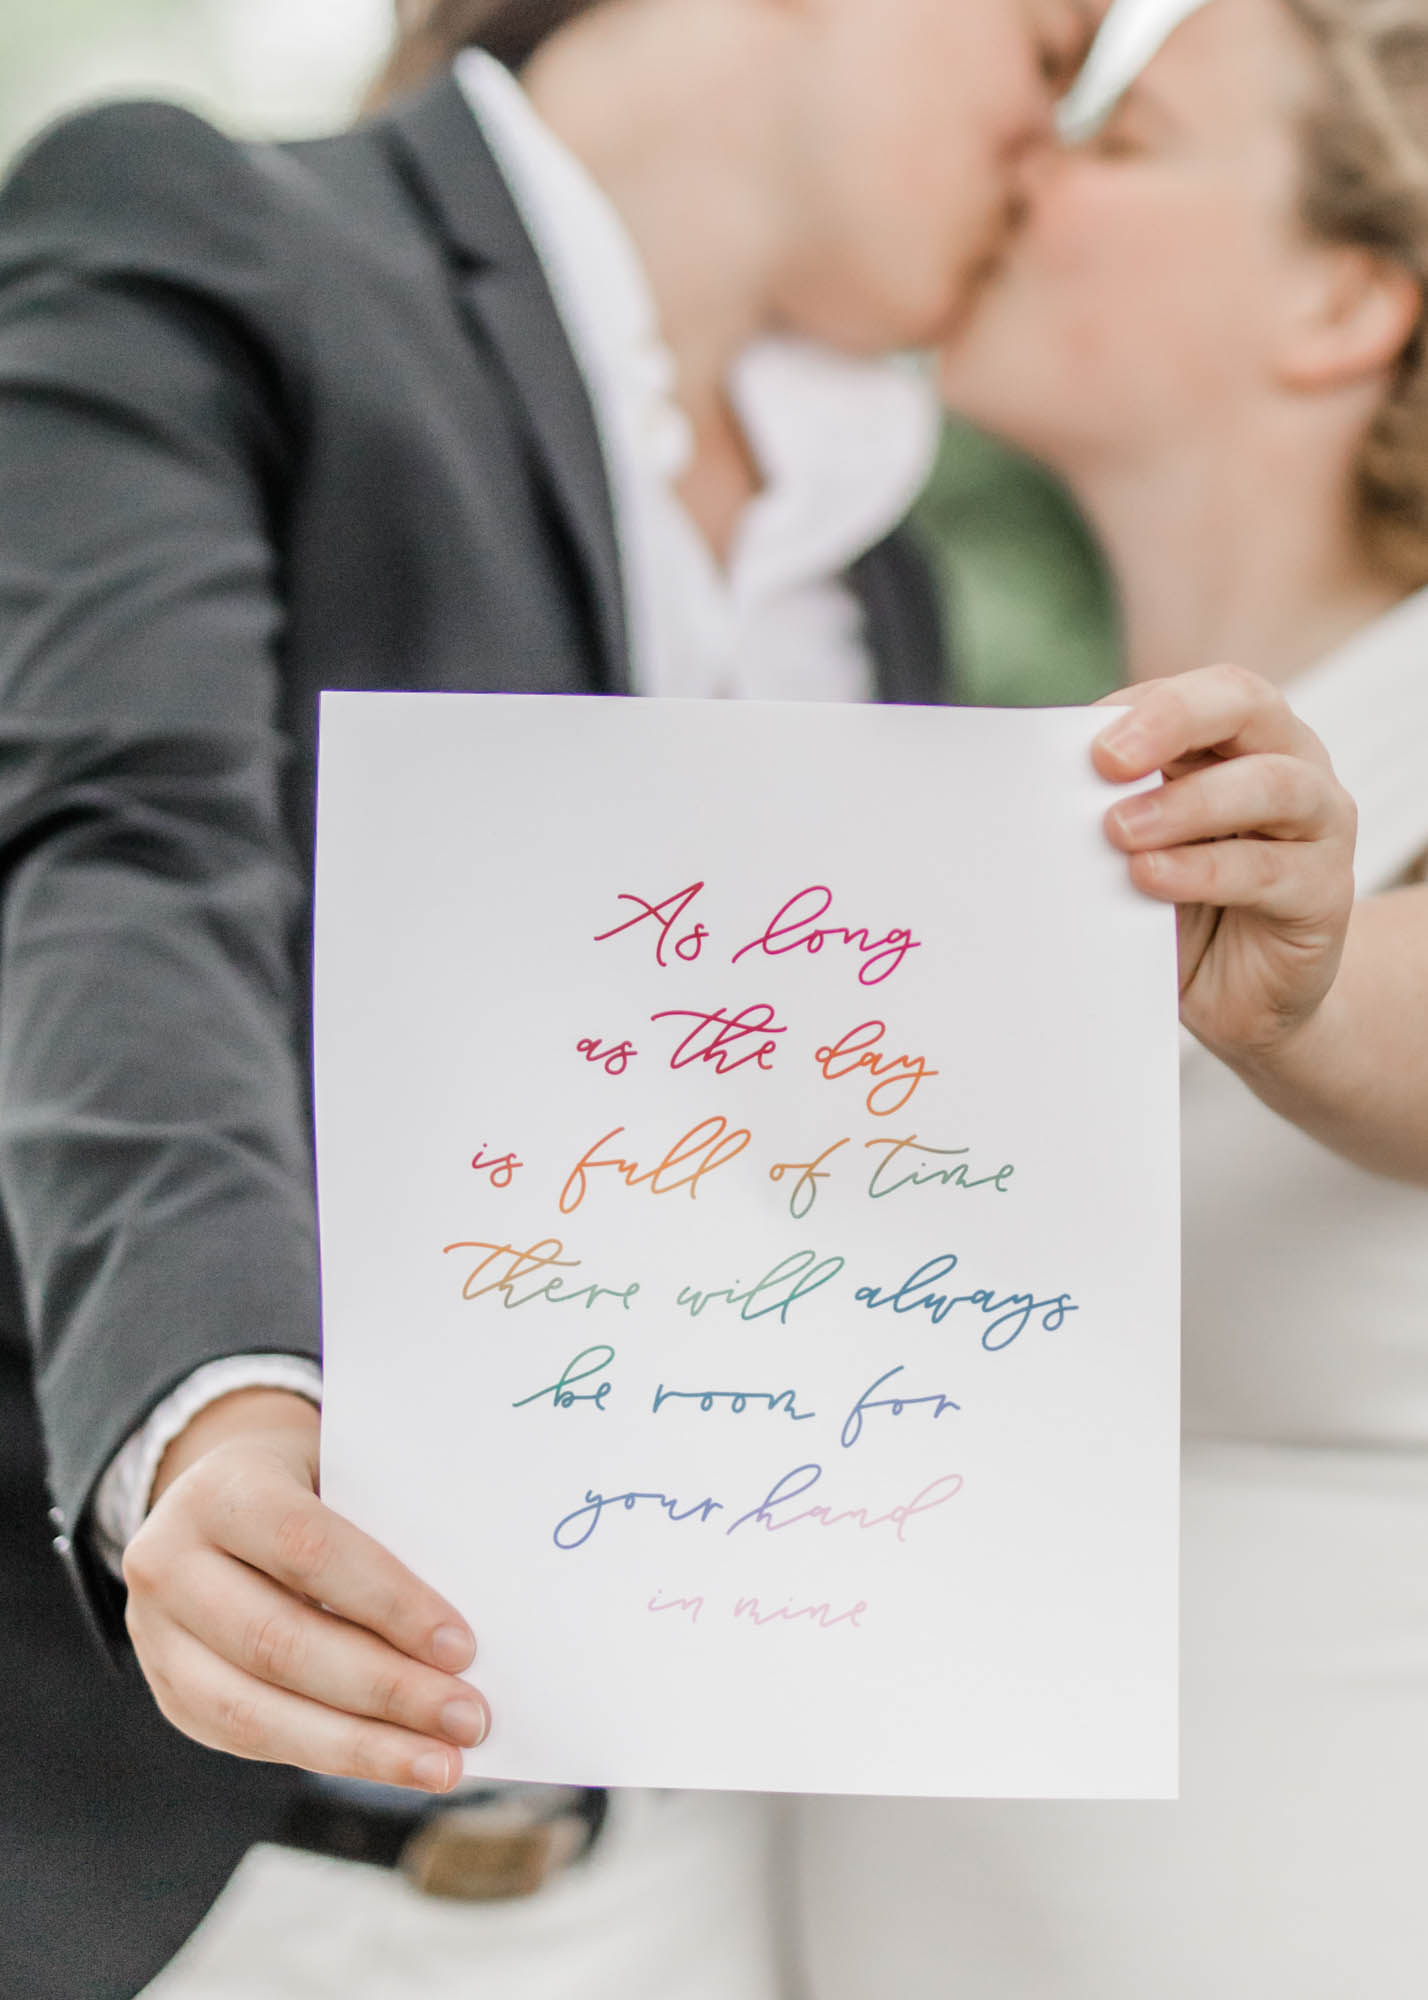 Colorful rainbow wedding inspiration | Lindsay & Co. Photo | Featured on Equally Wed, the leading LGBTQ+ wedding magazine